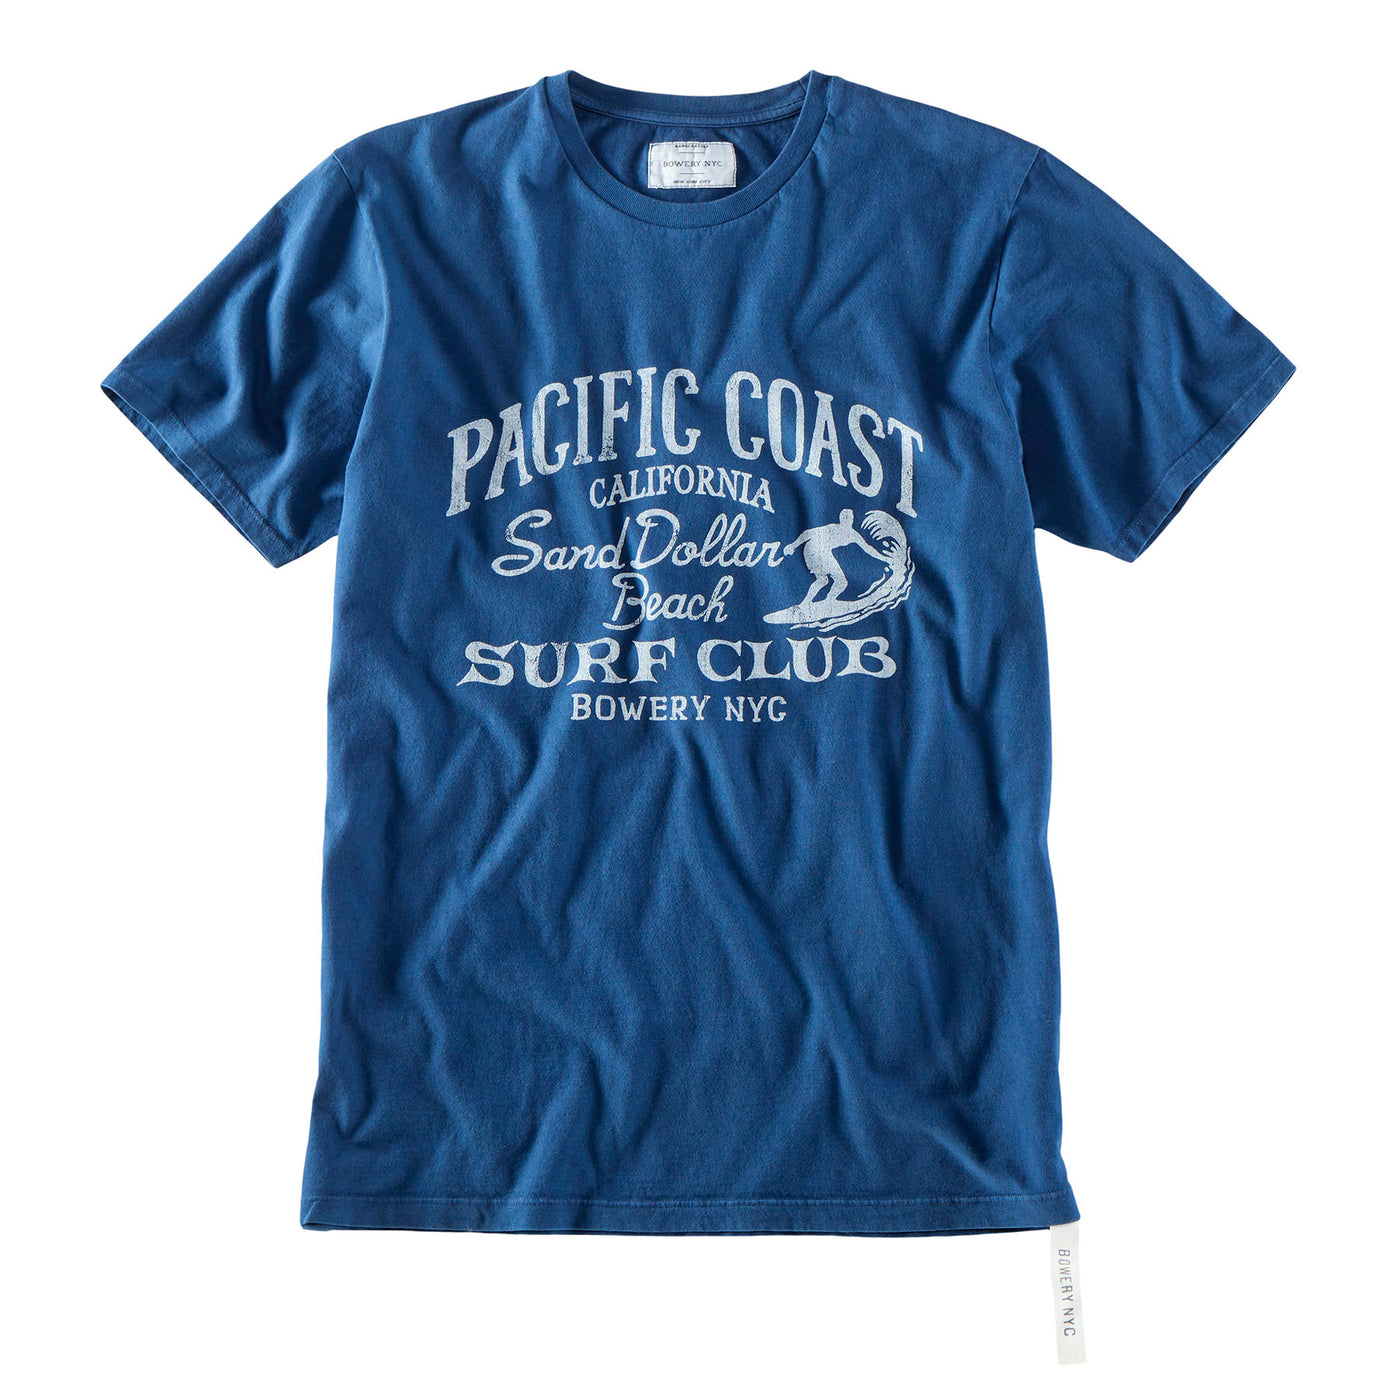 Bowery NYC T-Shirt Pacific Coast